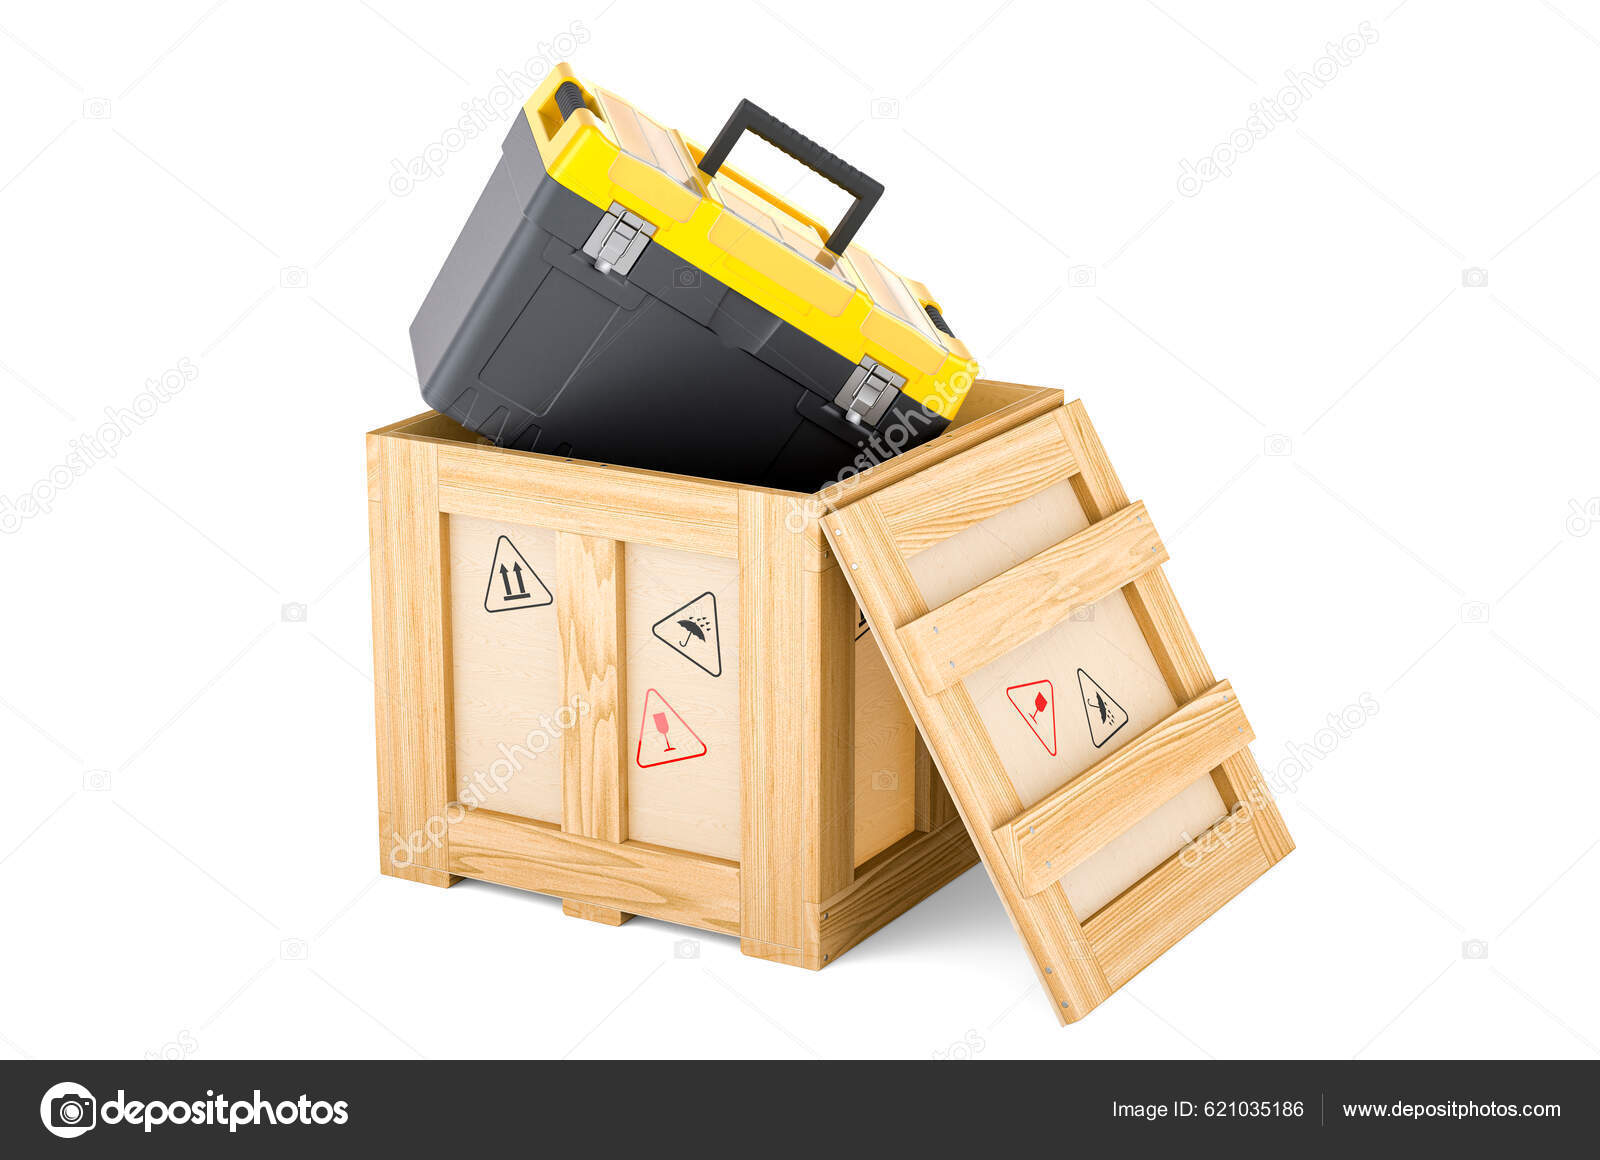 https://st5.depositphotos.com/33457736/62103/i/1600/depositphotos_621035186-stock-illustration-plastic-toolbox-wooden-box-delivery.jpg